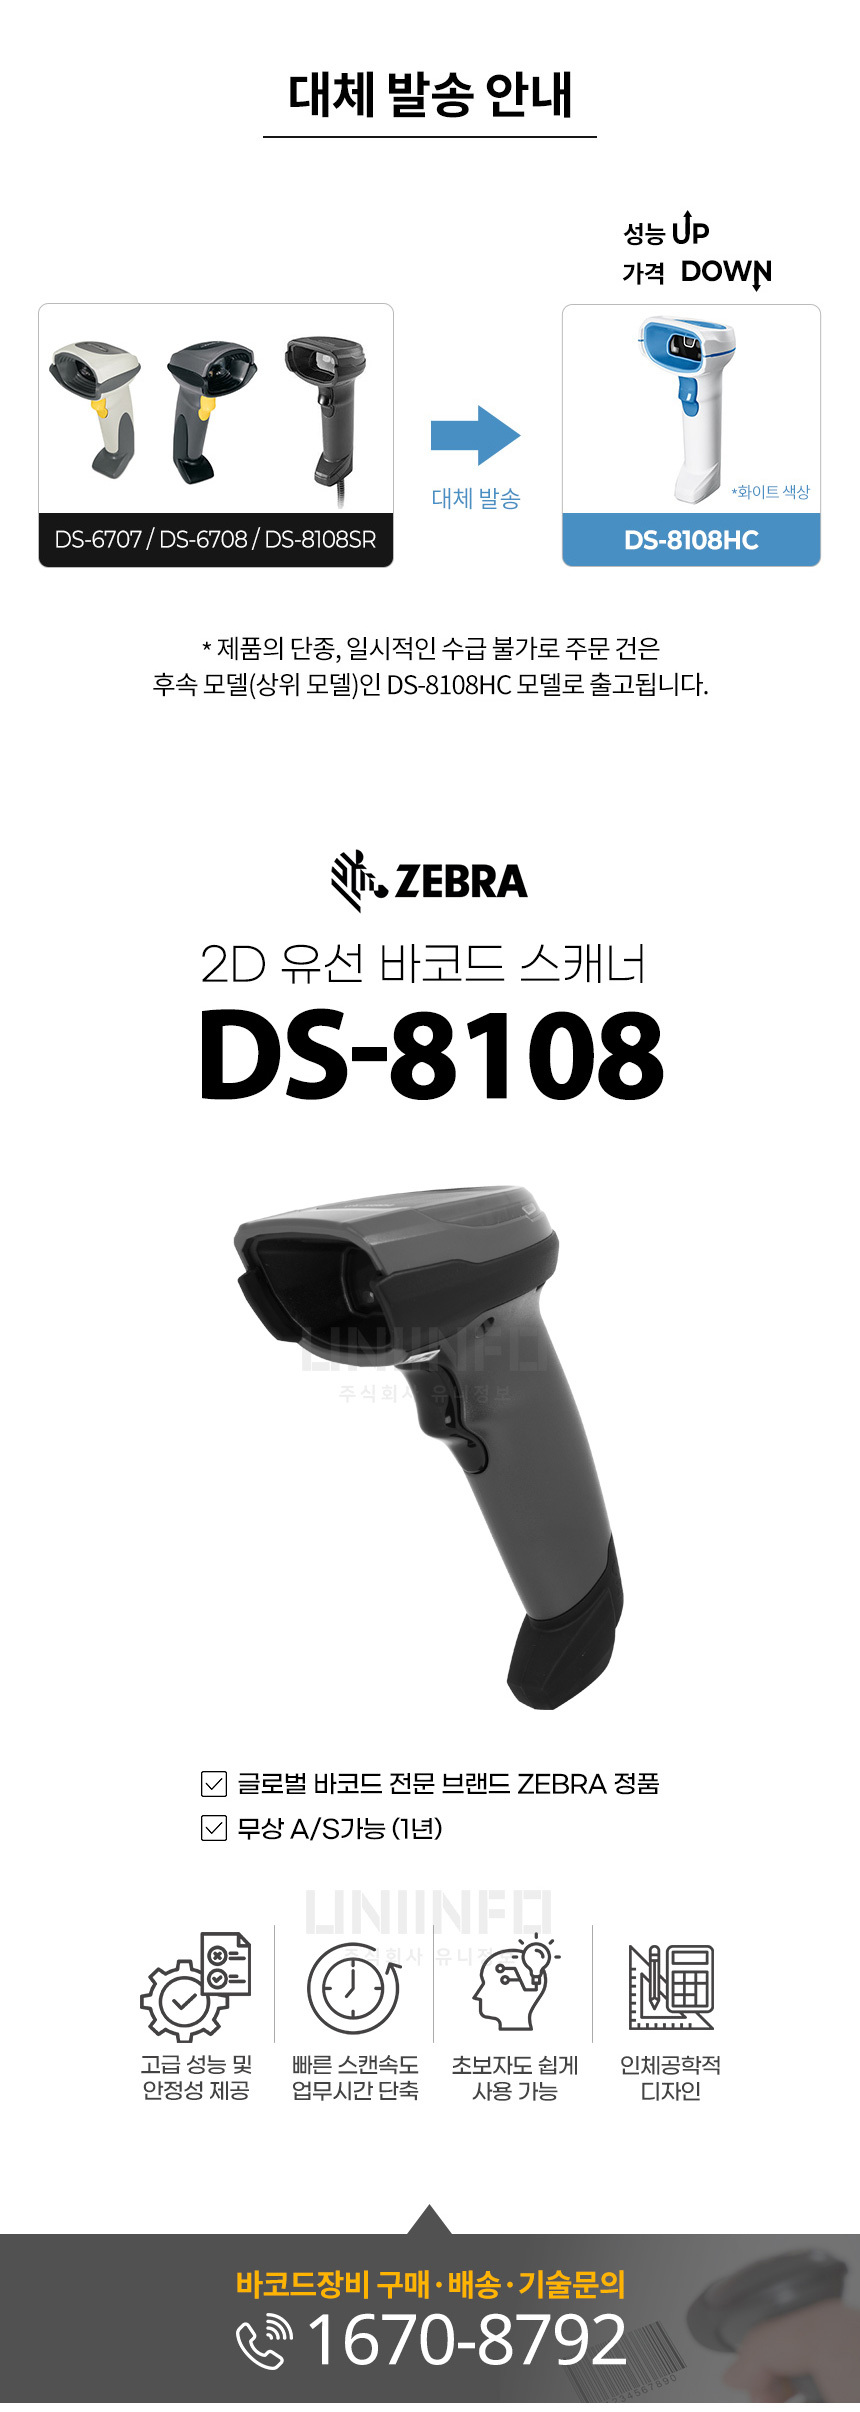 2d 유선 바코드 스캐너 ds-8108 고급성능 및 안정성 제공 인체공학적 디자인 빠른 스캔속도